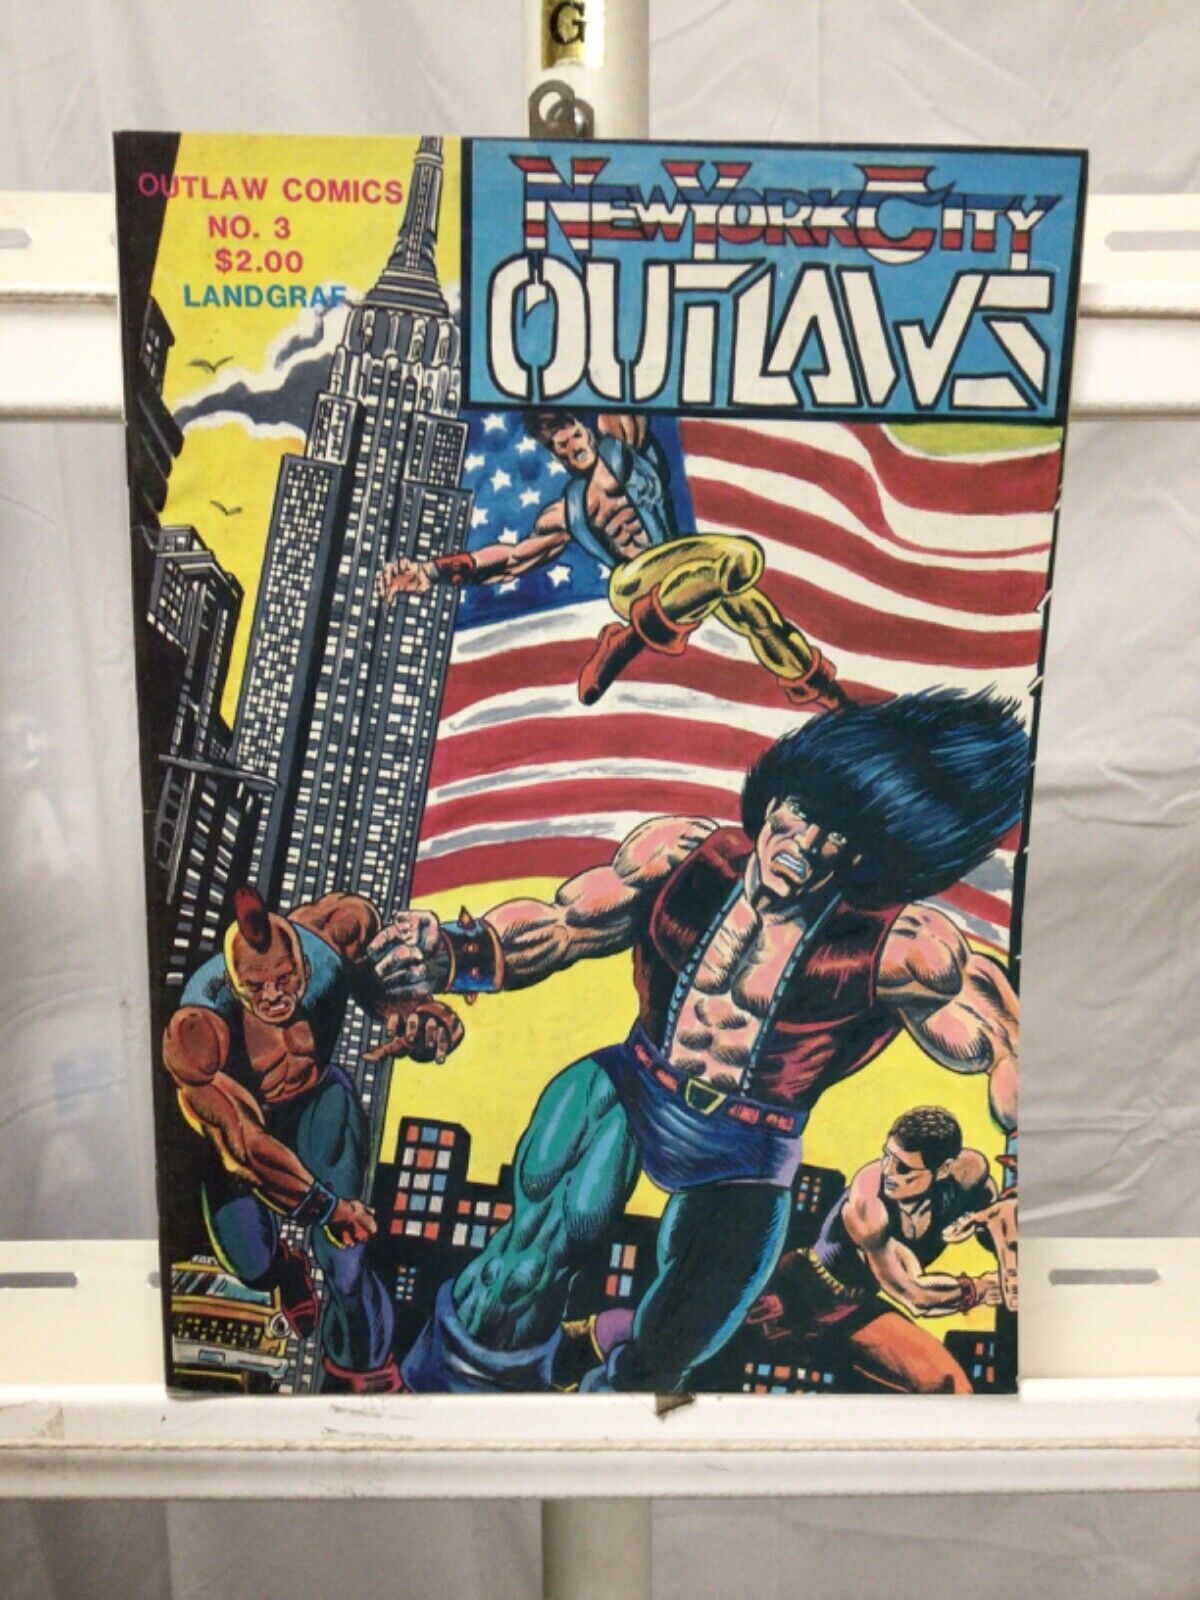 Outlaw Comics New York City Outlaws #3 FN 1986